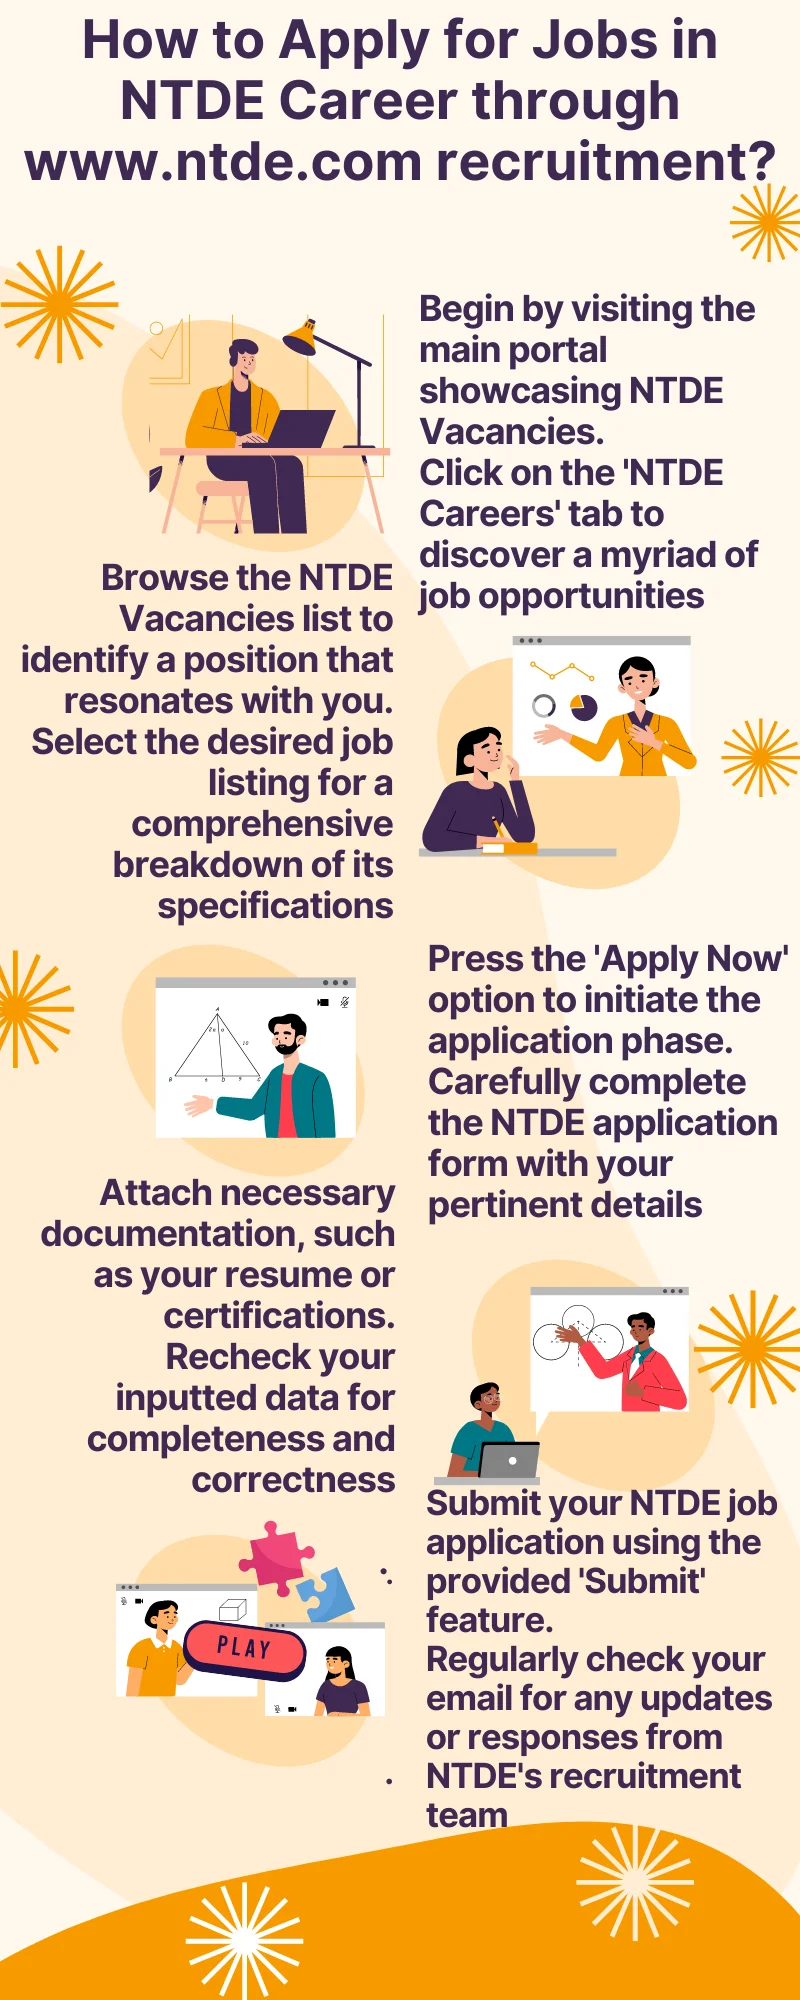 How to Apply for Jobs in NTDE Career through www.ntde.com recruitment?